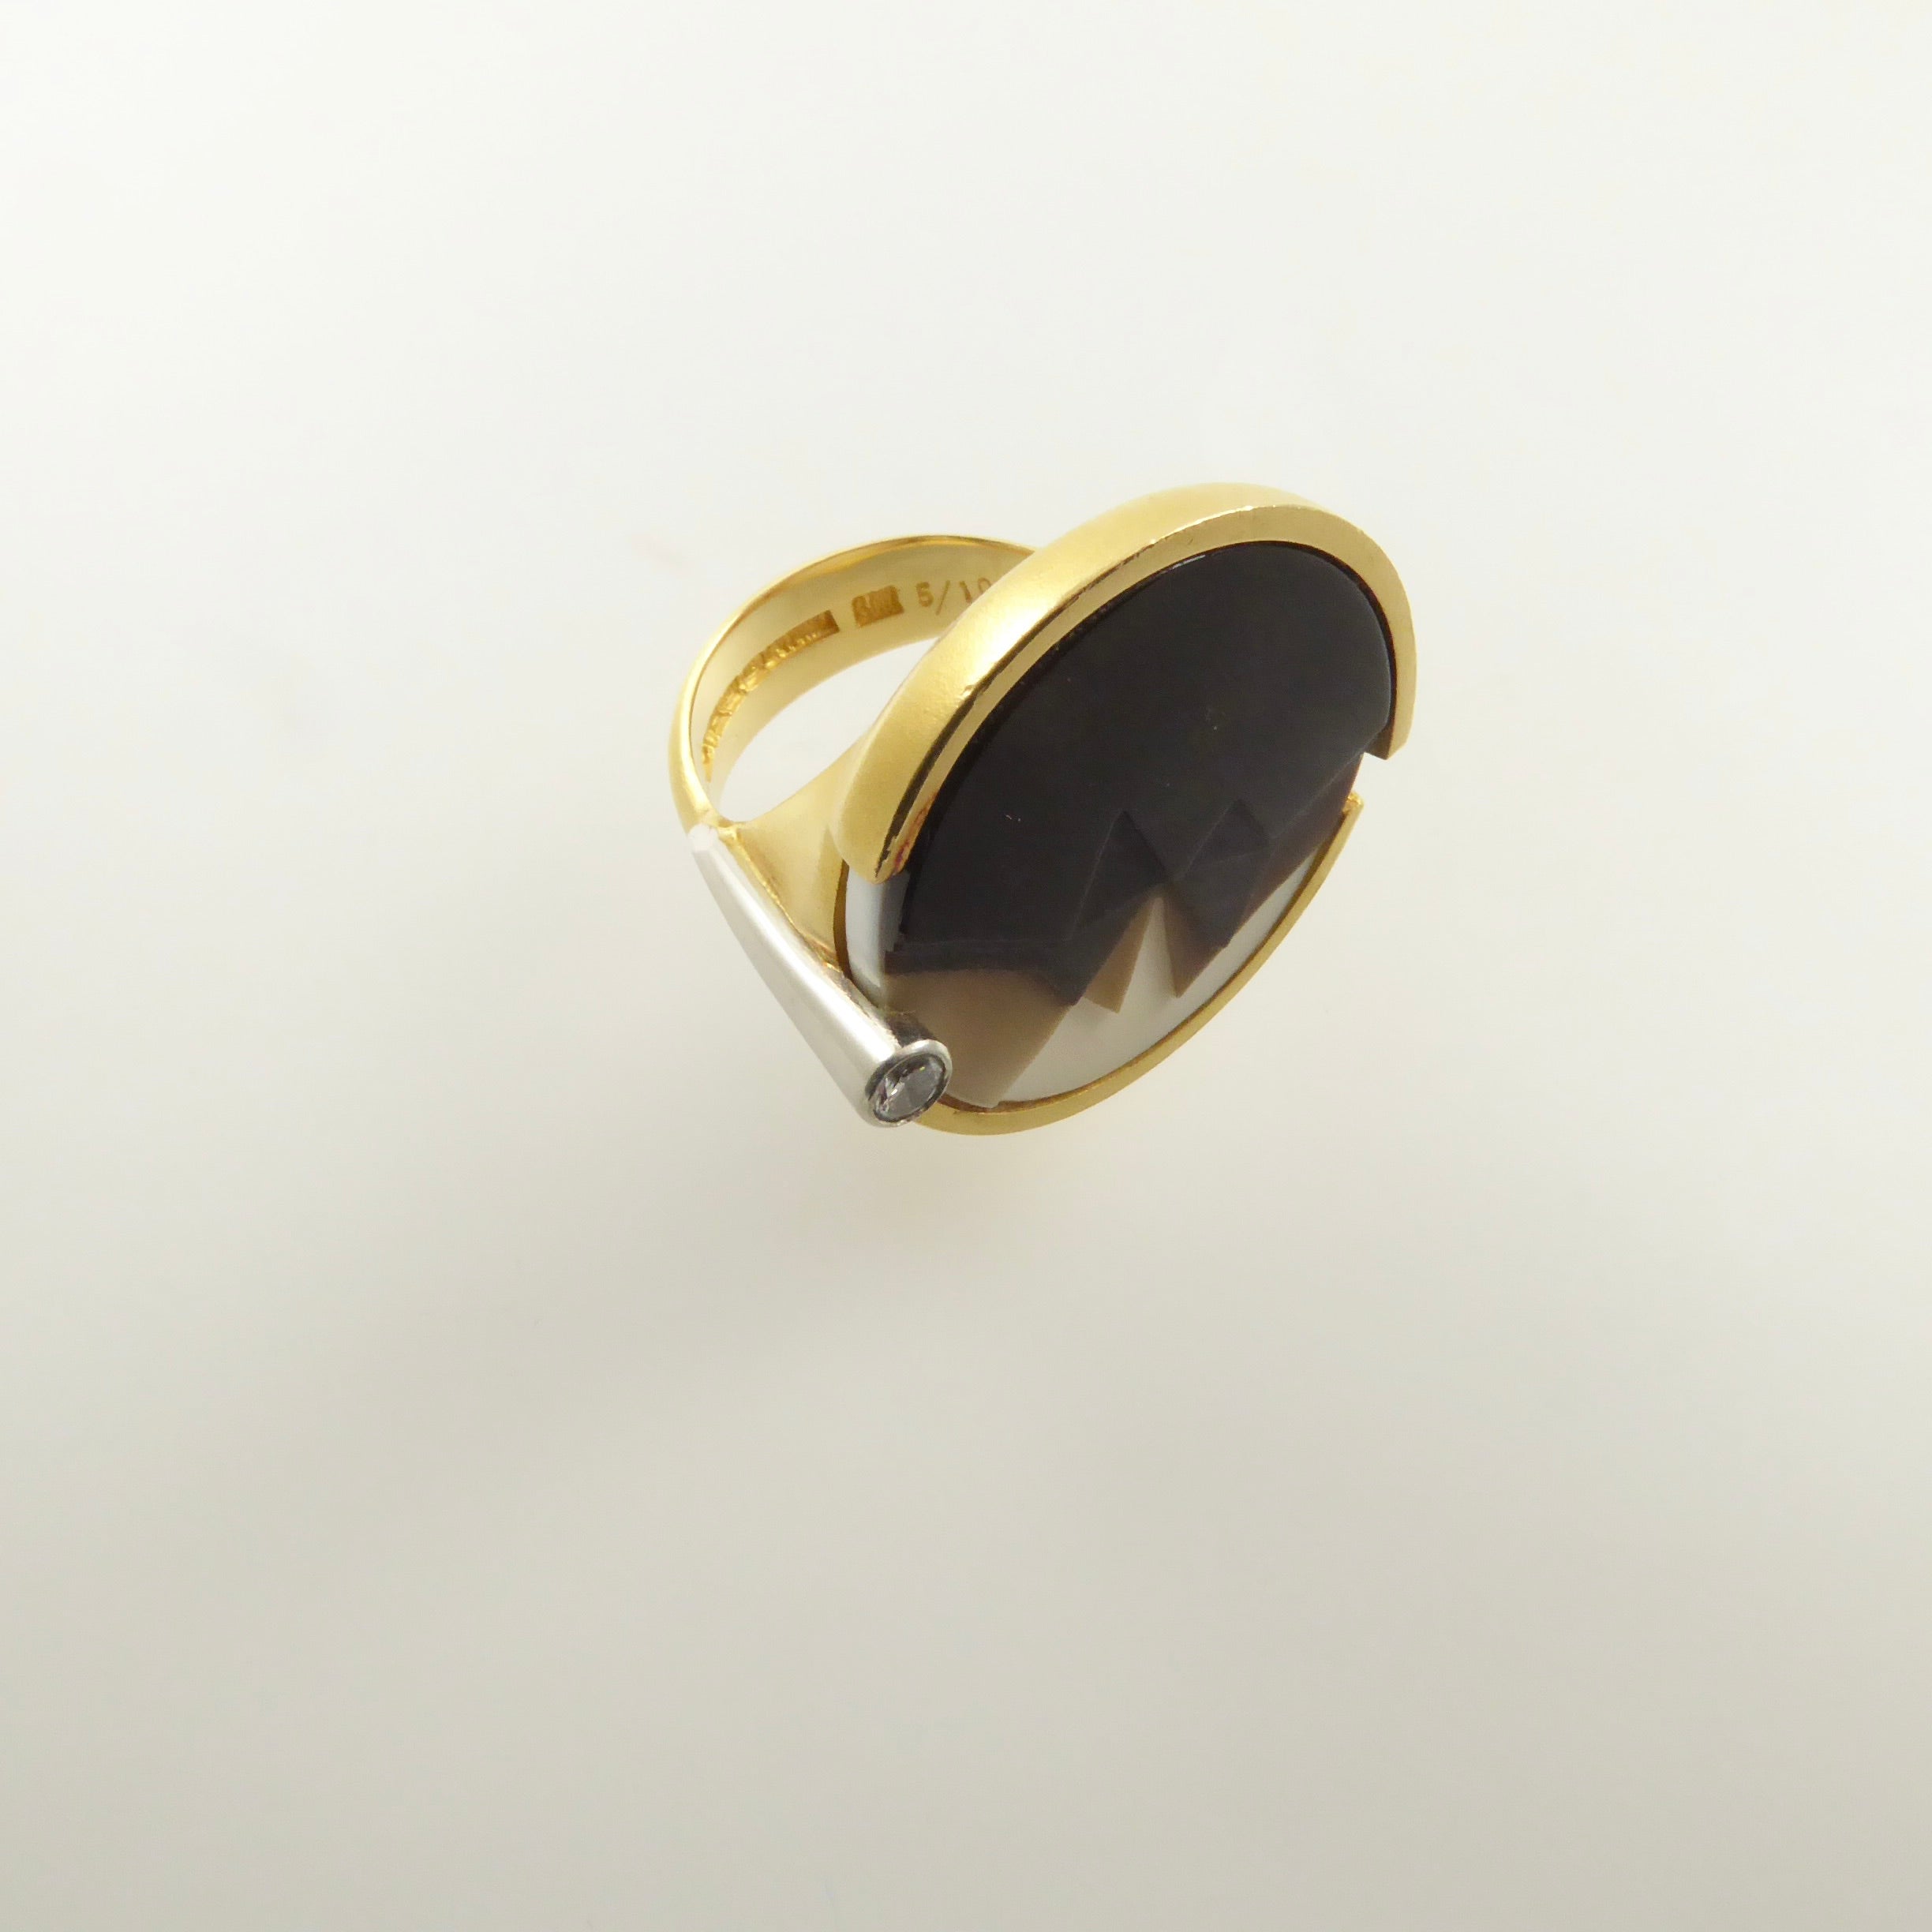 Lapponia Munsteiner gold ring